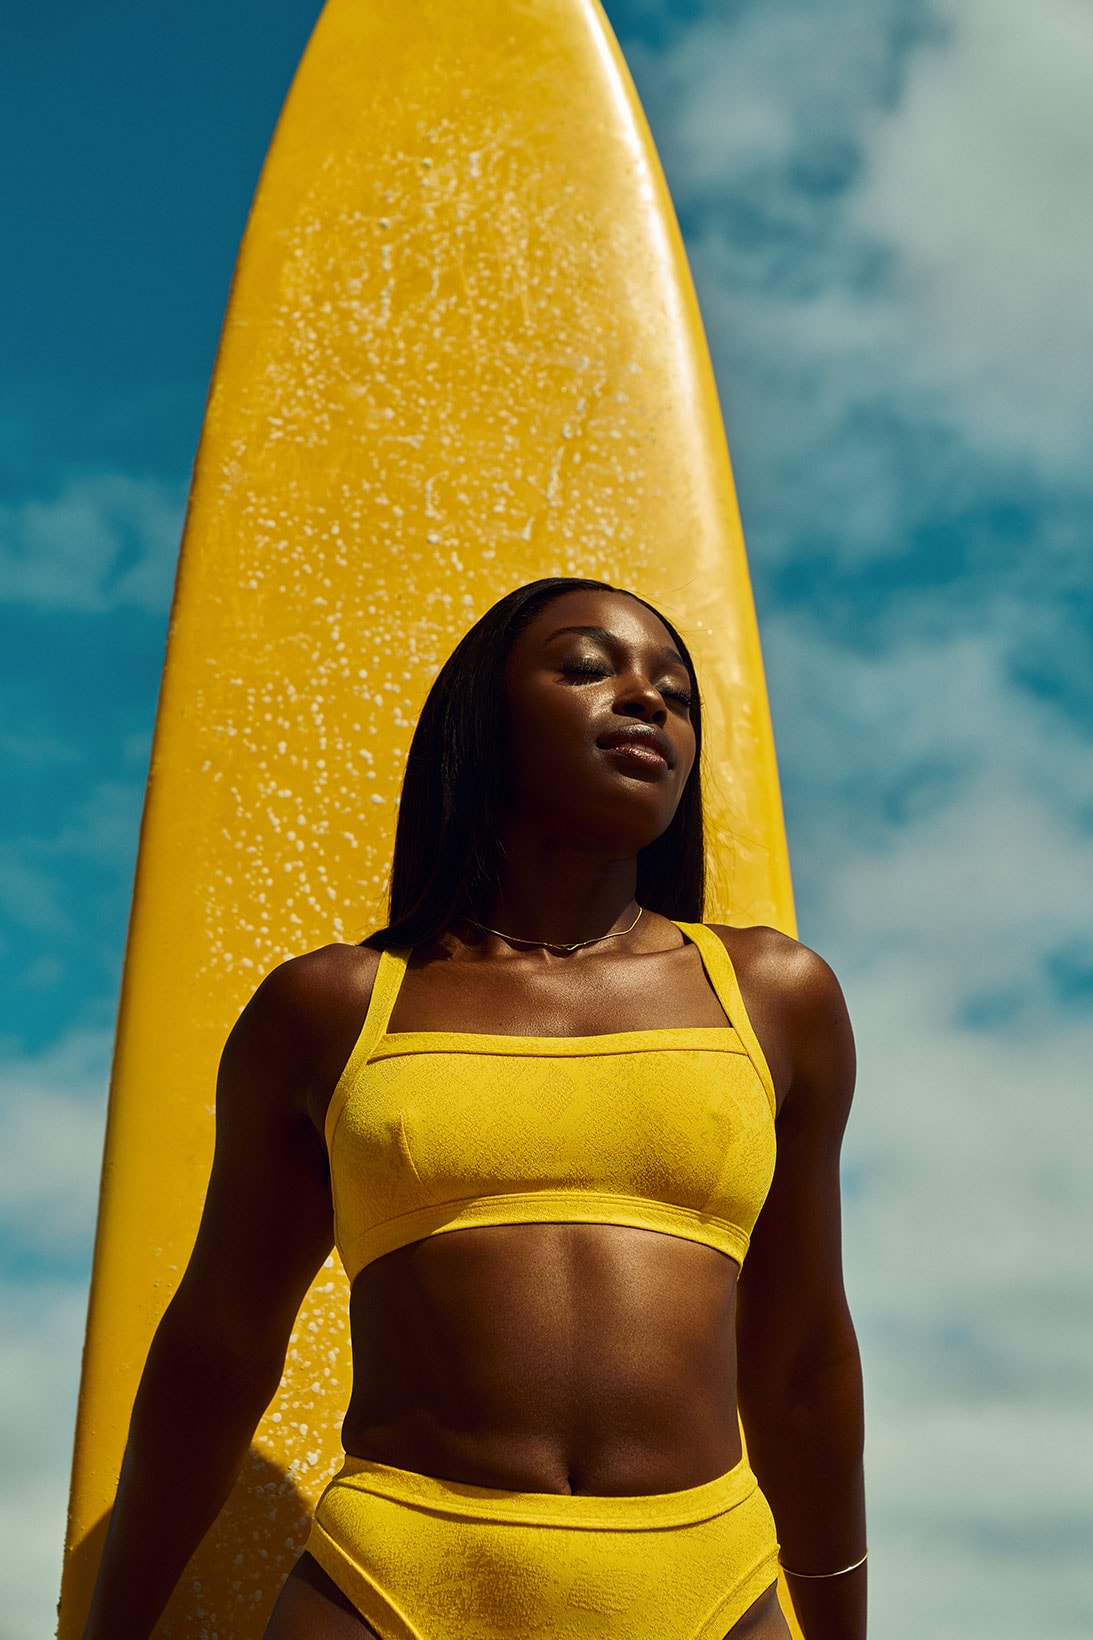 solid and striped sloane stephens tennis player yellow bikini surfboard sky